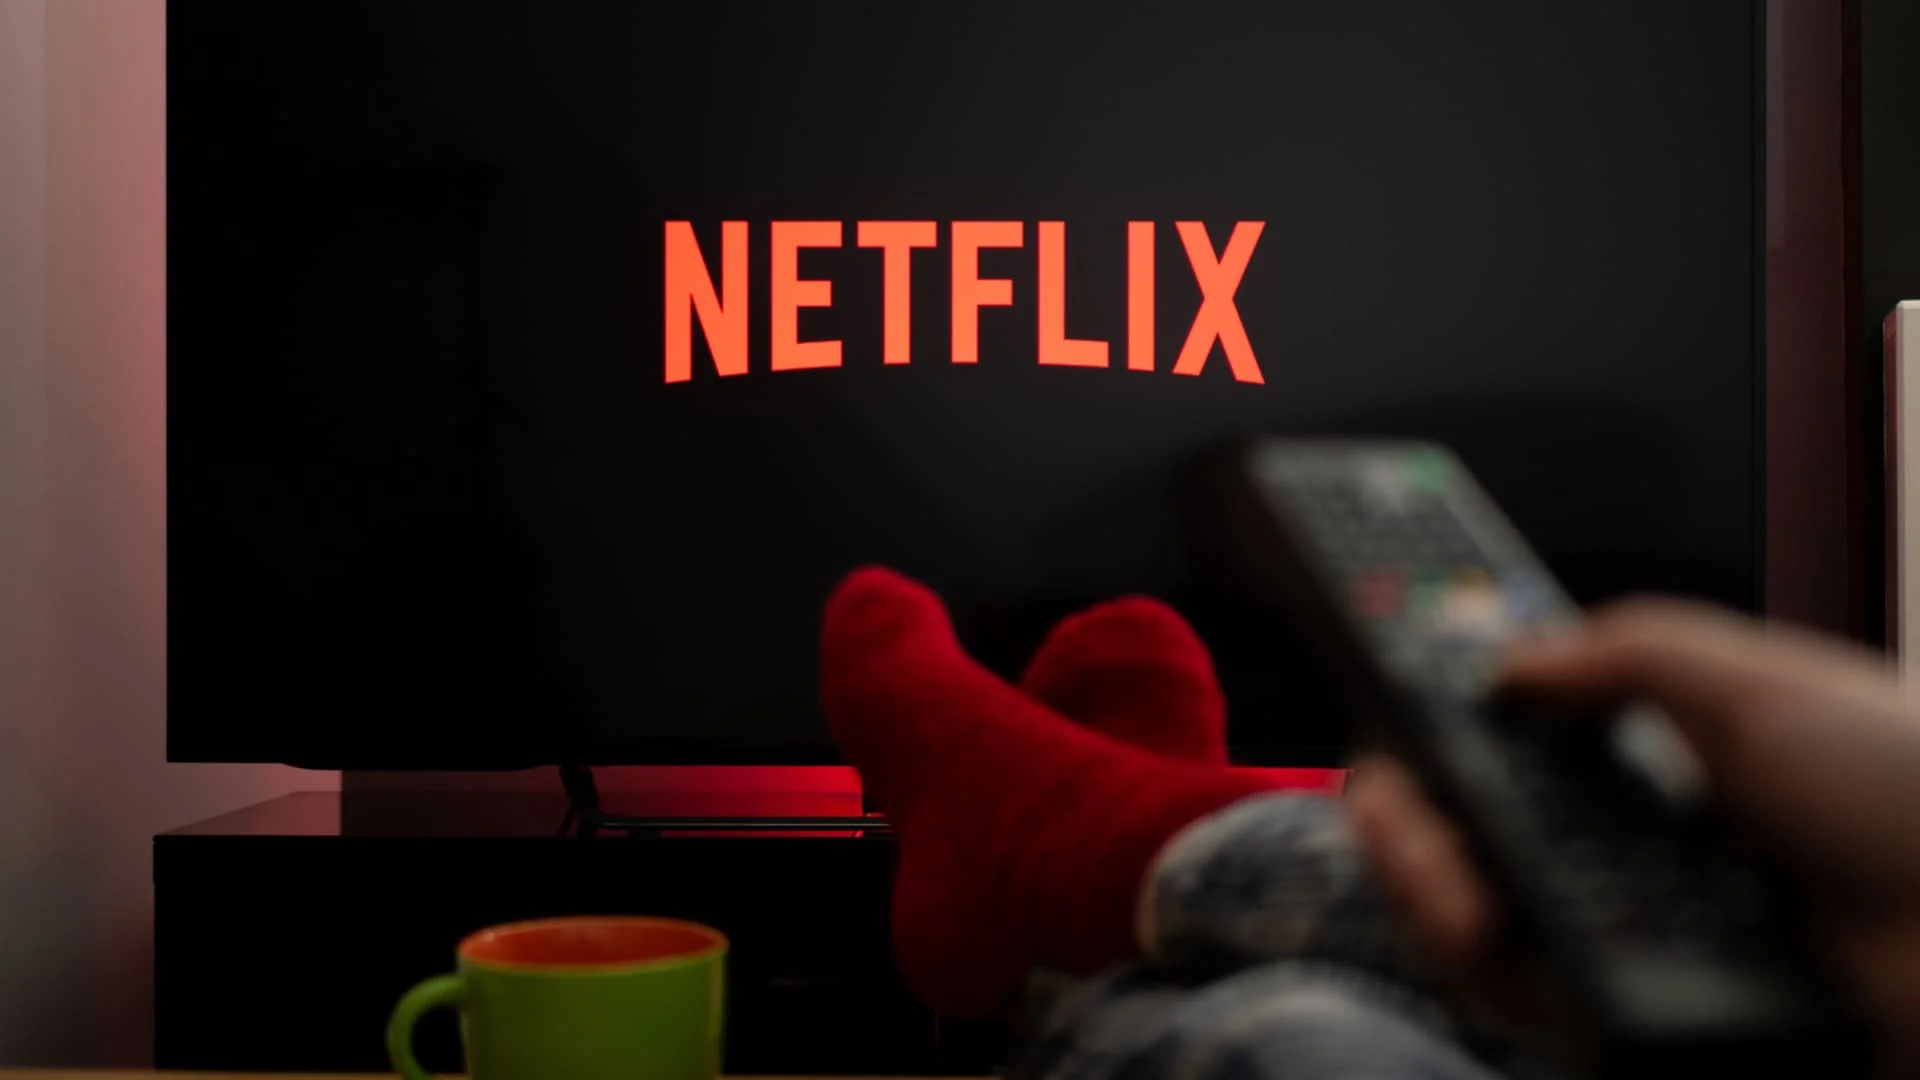 Netflix aumenta preços e encerra plano básico no Brasil